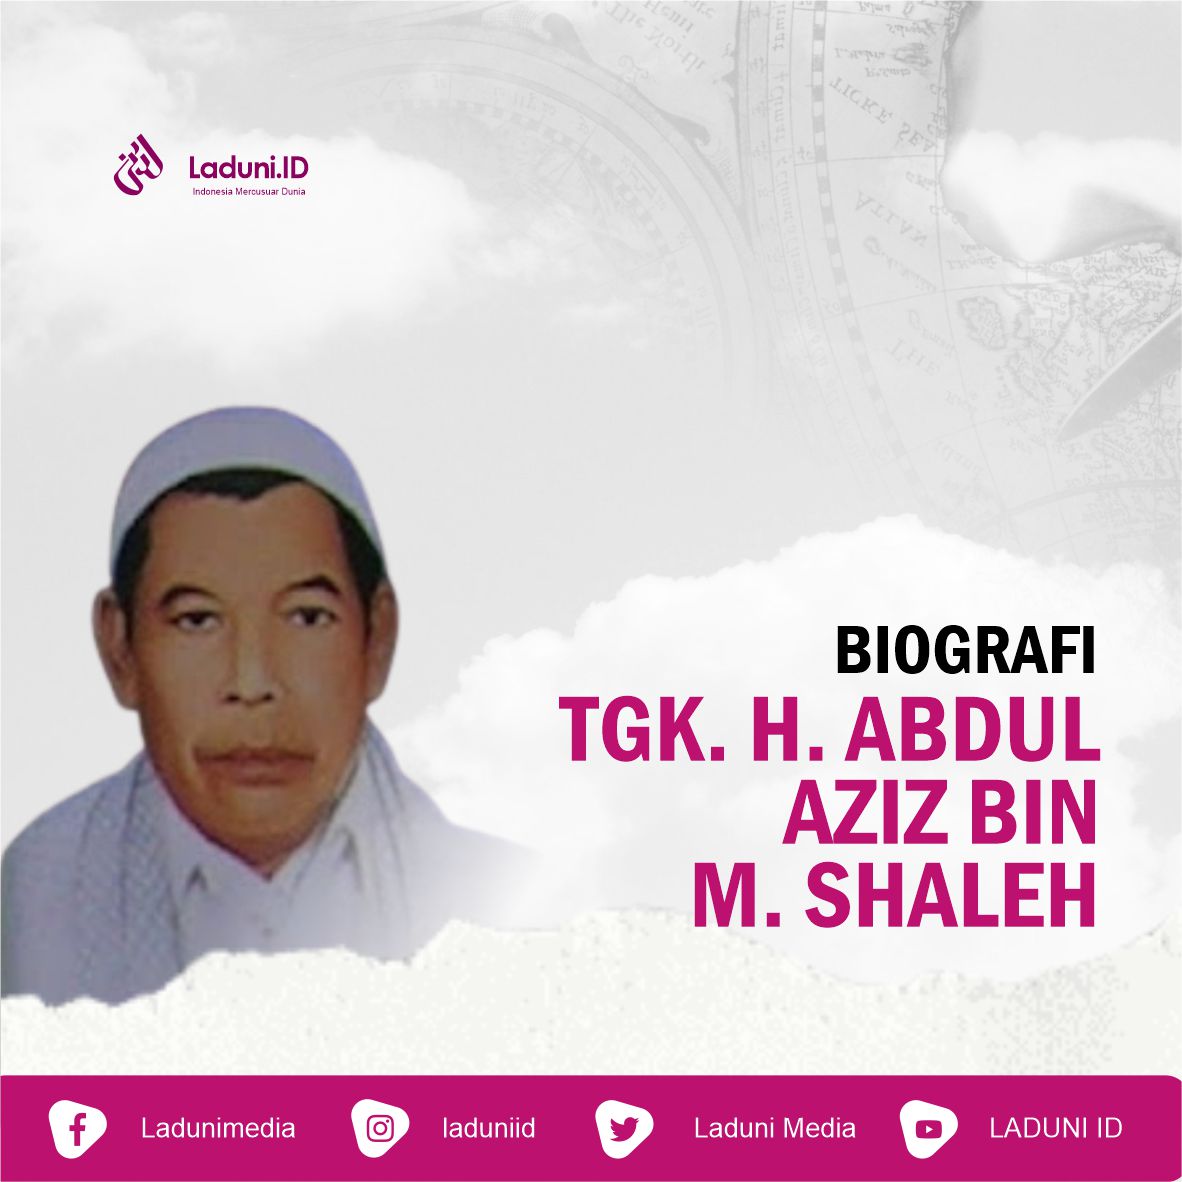 Biografi Tgk. H. Abdul Aziz bin M. Shaleh